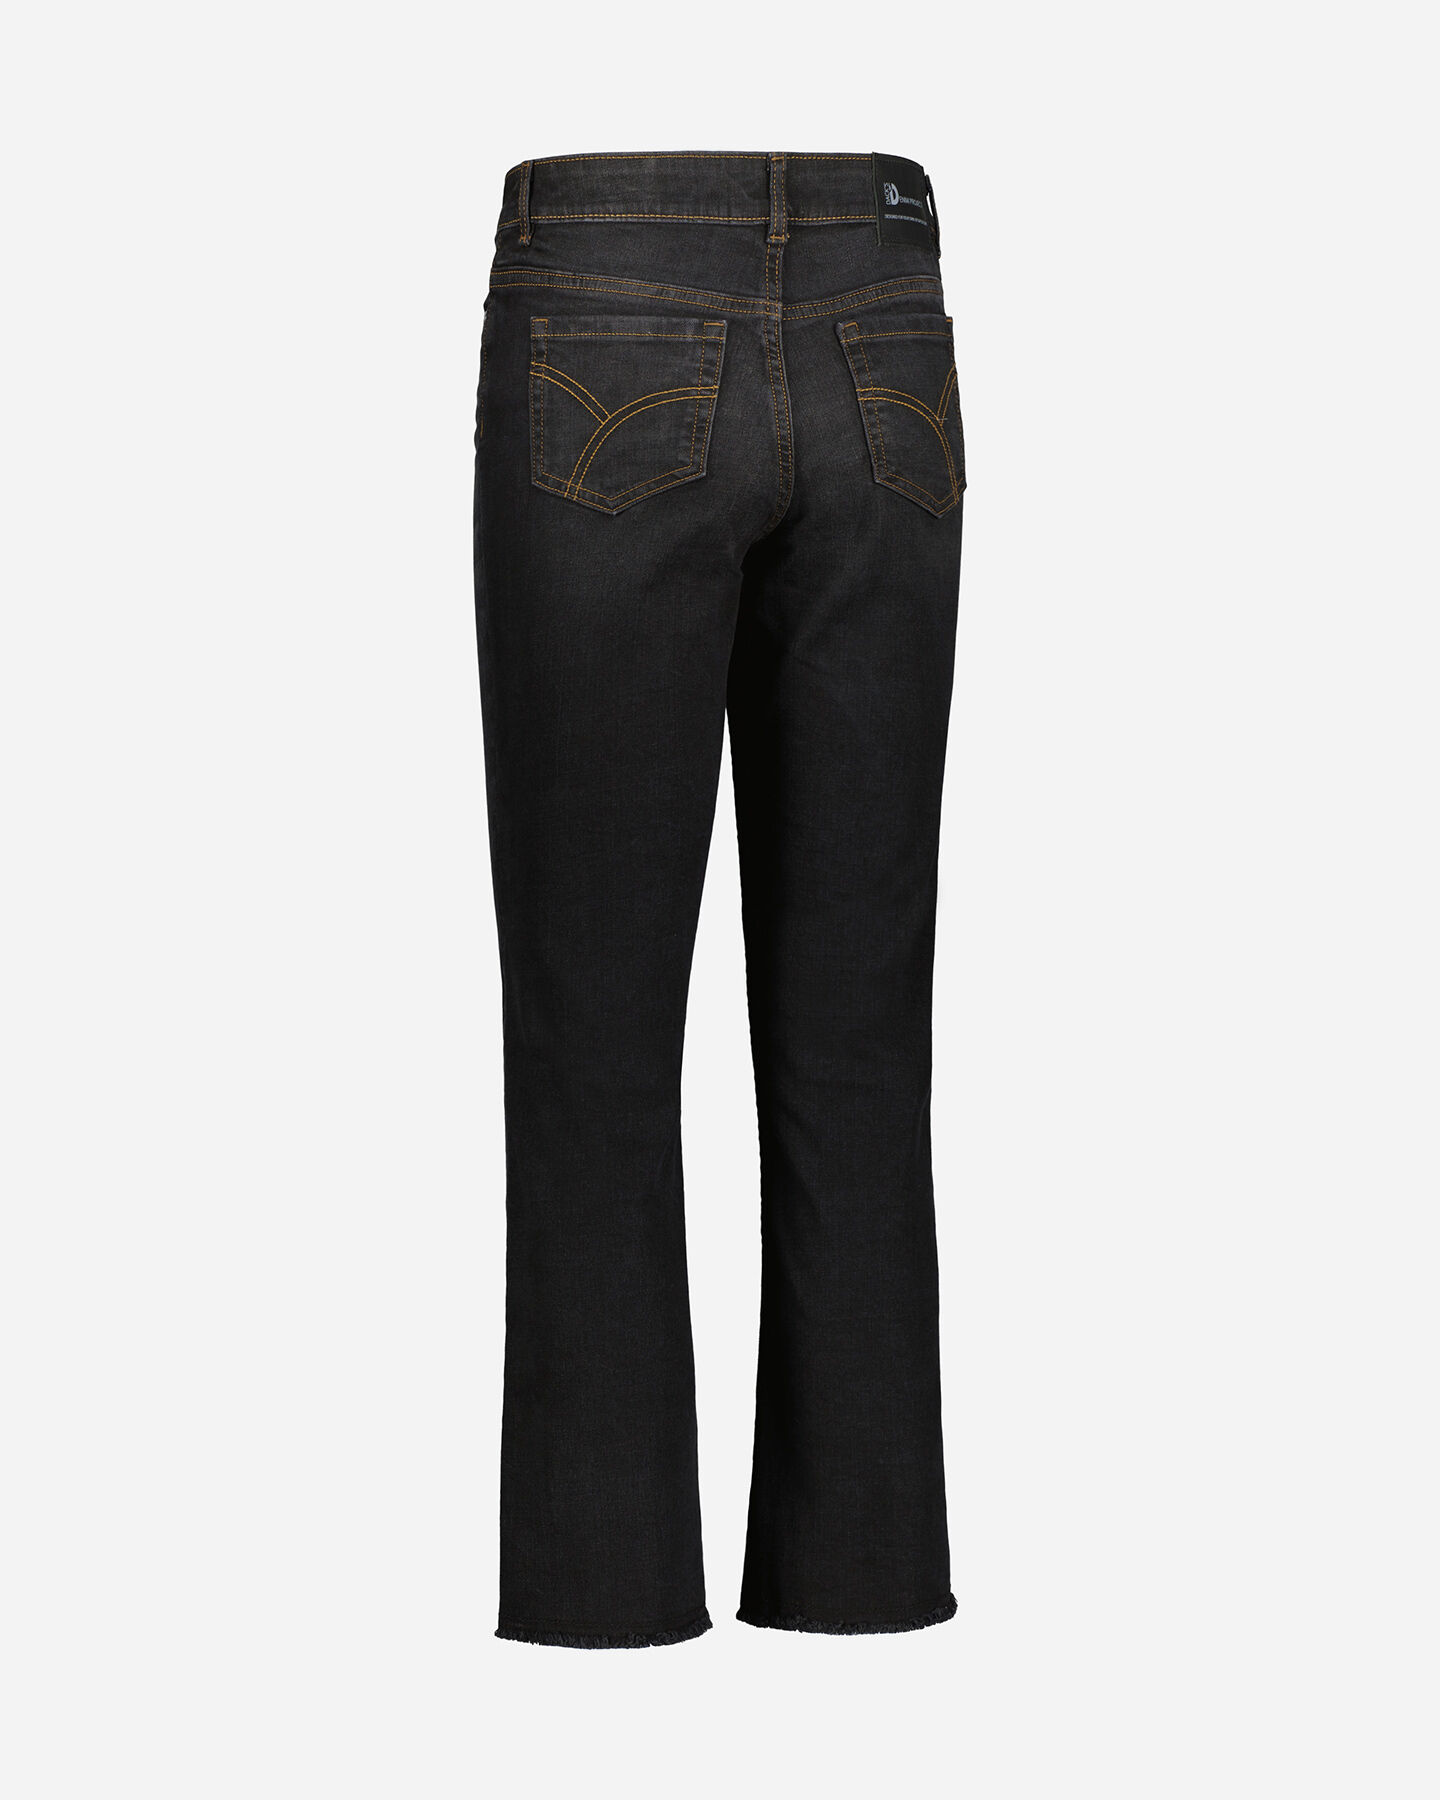  Jeans DACK'S DENIM PROJECT W S4124818|DD|40 scatto 5